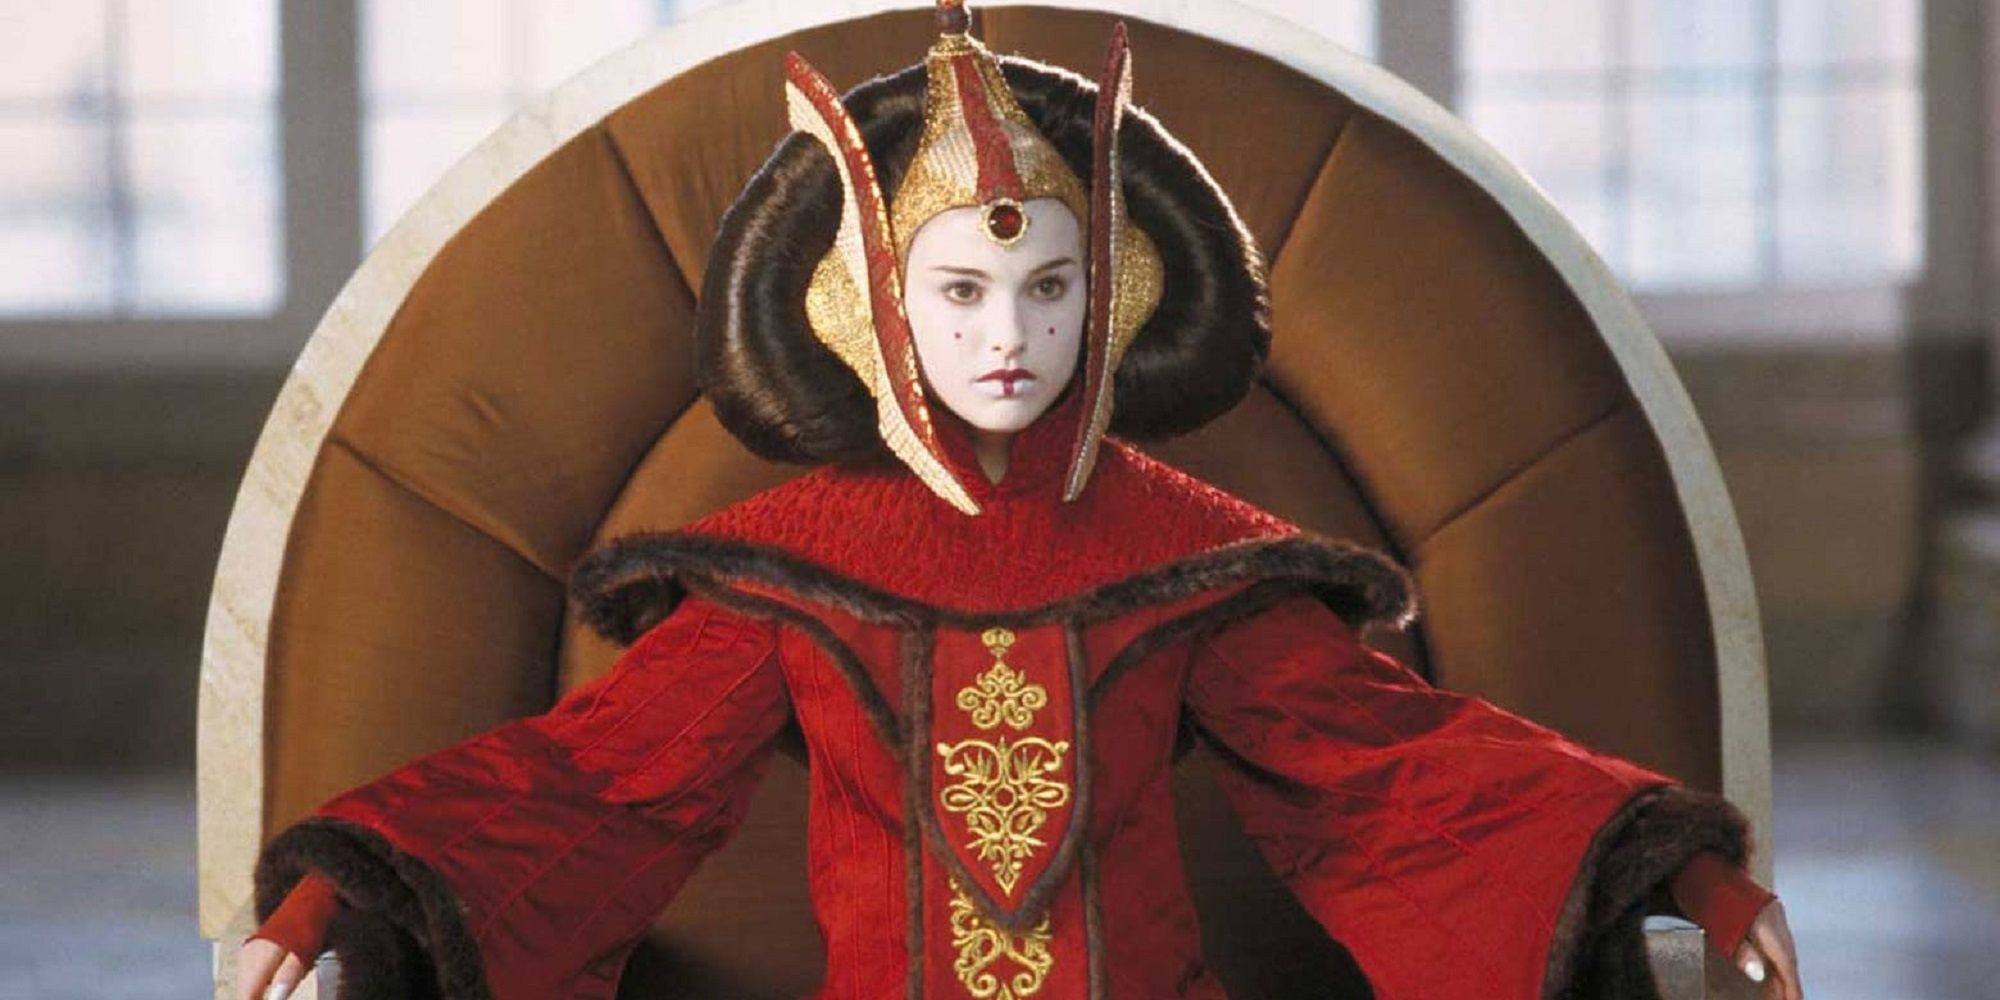 Padme Amidala sitting at her throne in Star Wars: Episode I - The Phantom Menace.